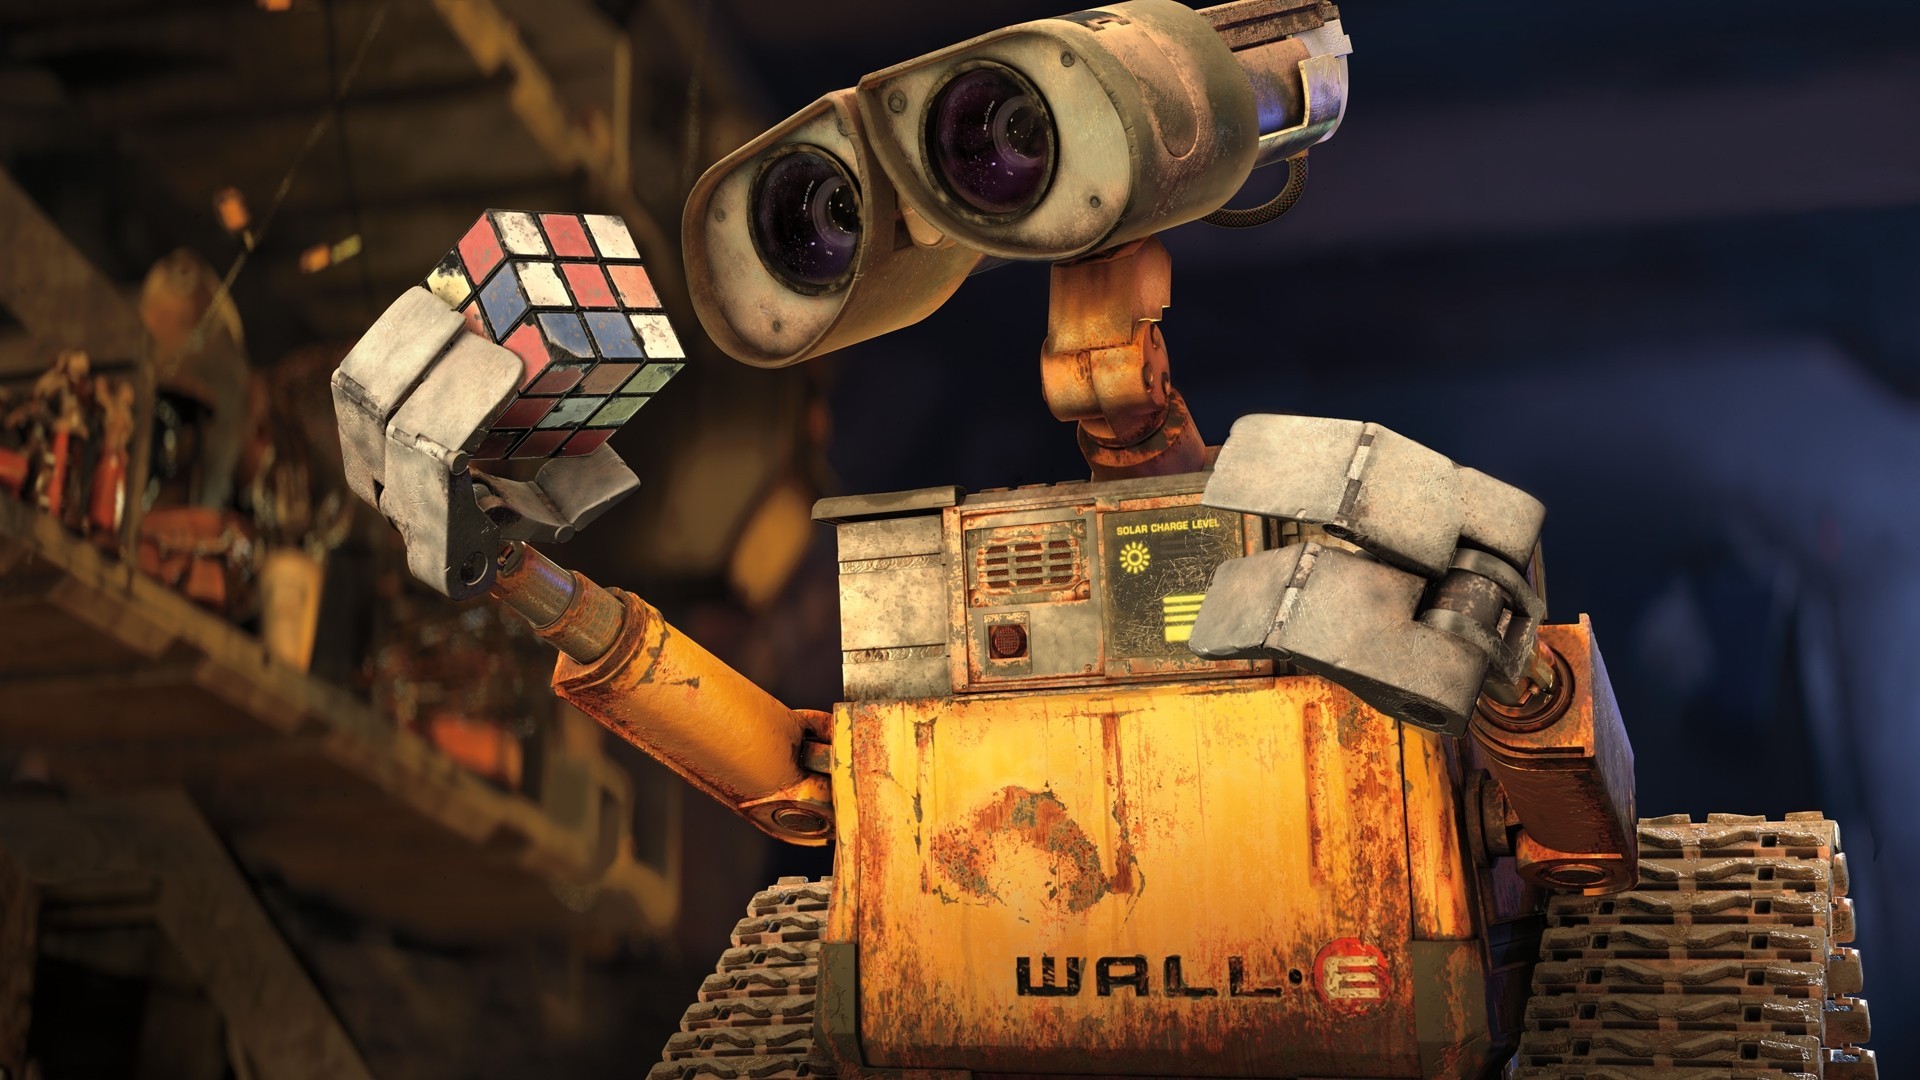 General 1920x1080 movies Disney Pixar WALL-E Rubik's Cube animated movies Pixar Animation Studios 3D Blocks cube dice